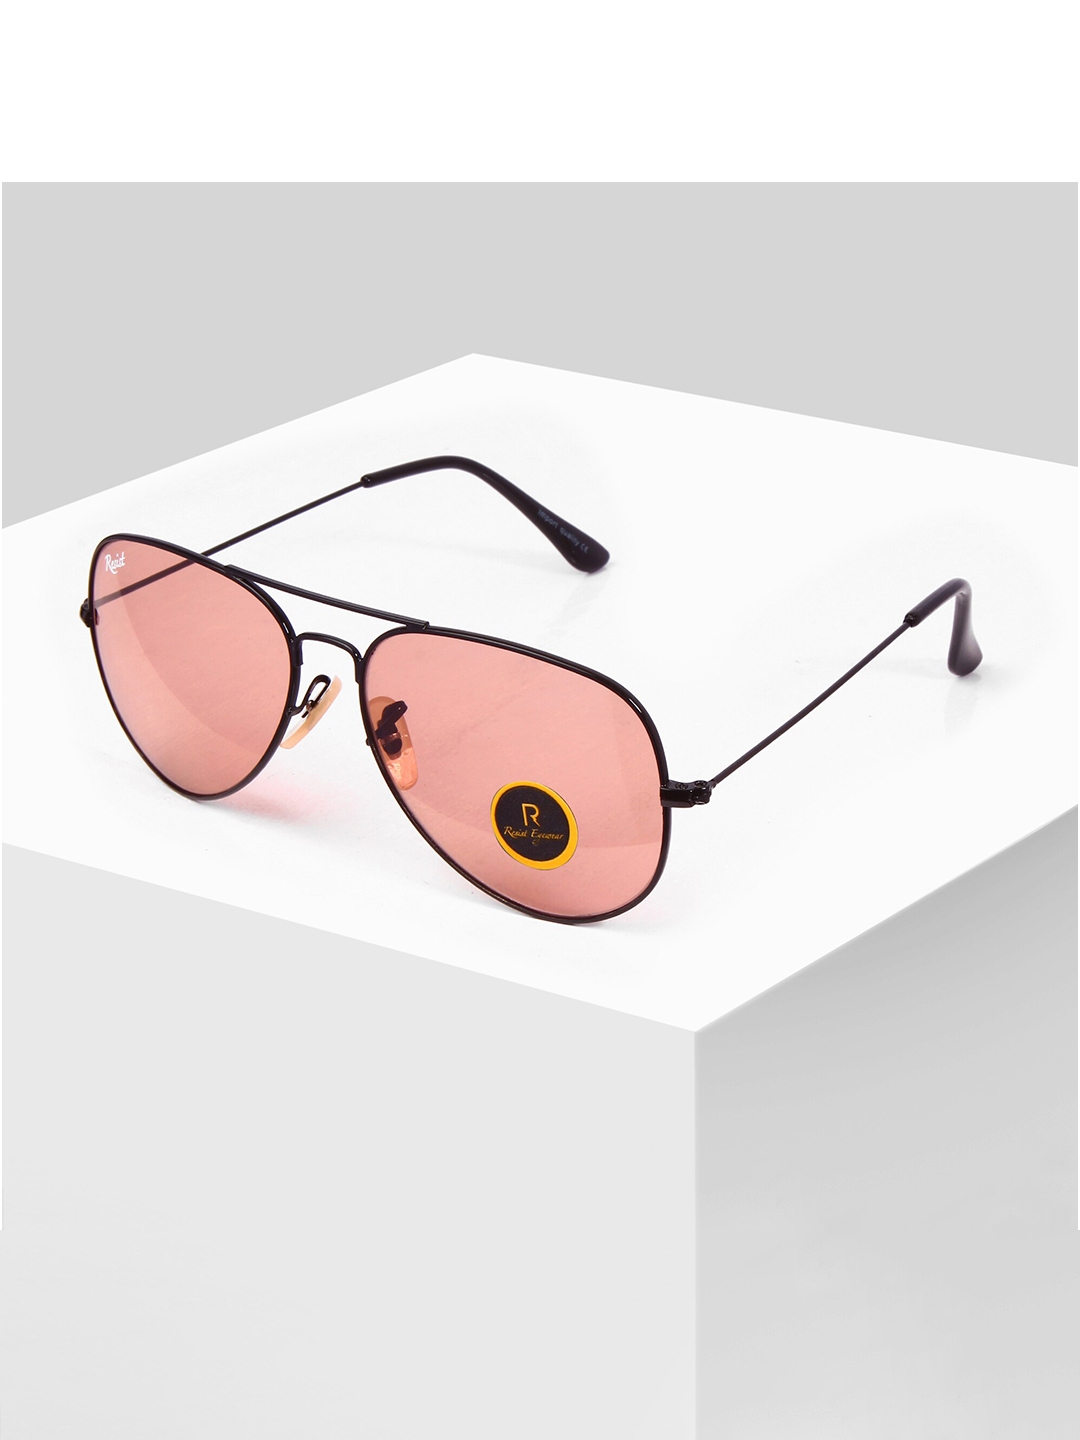 Buy Resist Eyewear Unisex Aviator Sunglasses With Uv Protected Lens Arc Black Pink